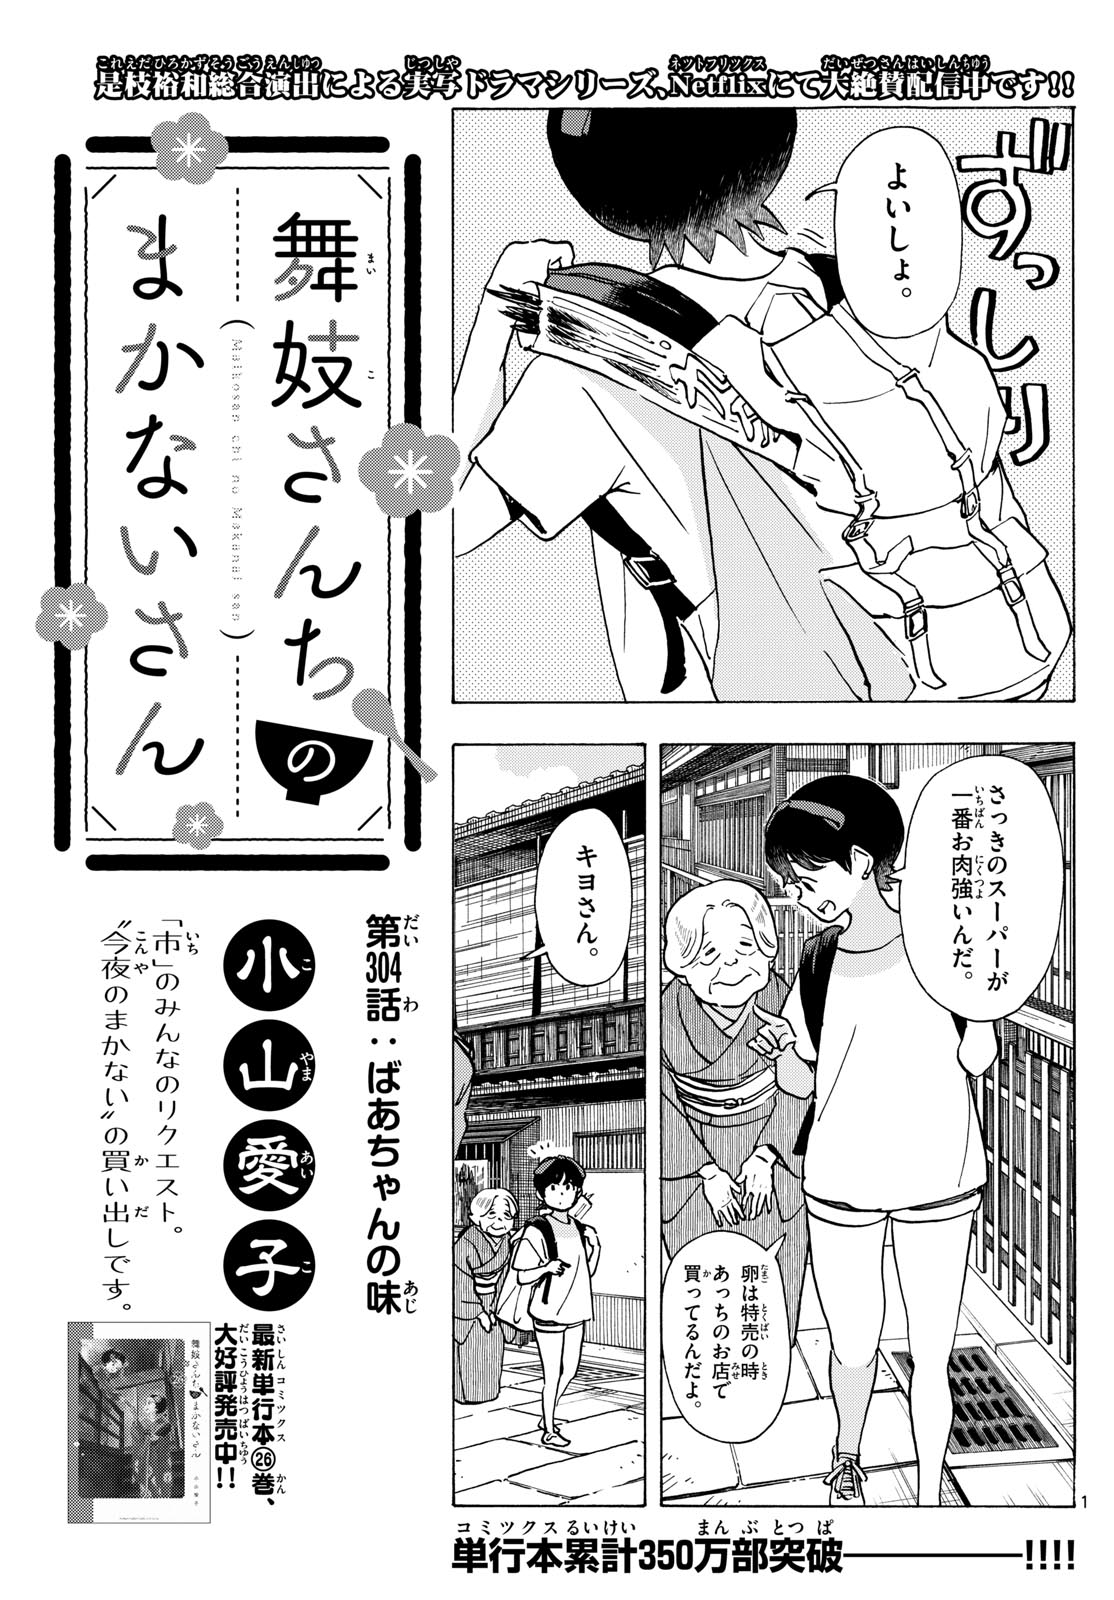 Maiko-san Chi no Makanai-san - Chapter 304 - Page 1